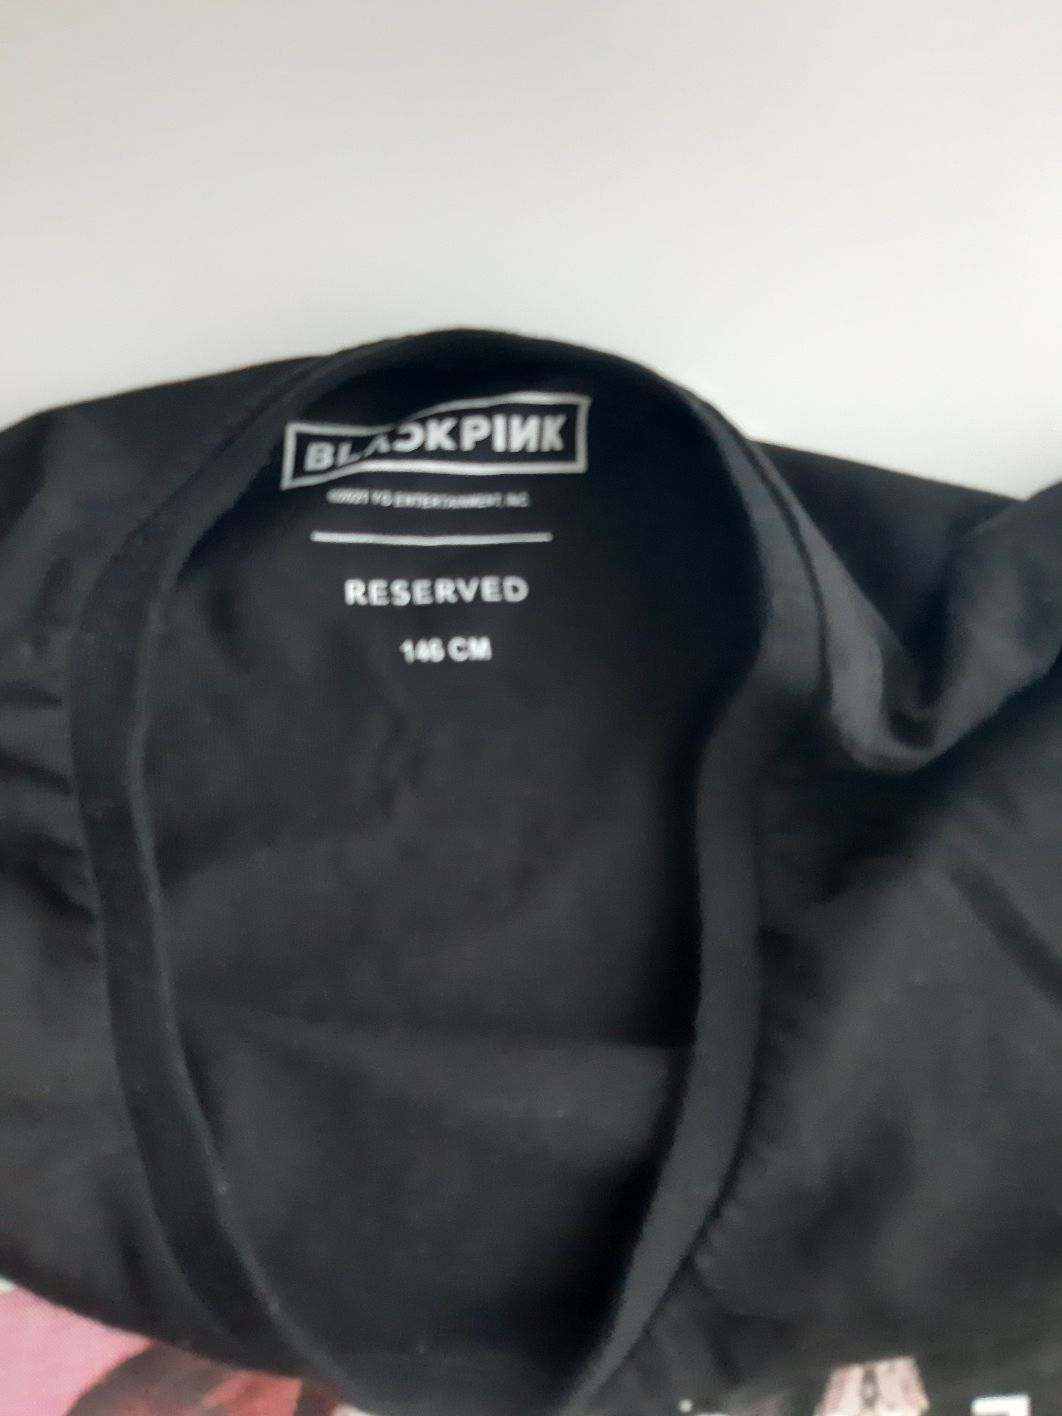 Blackpink t-shirt Reserved r.140-146cm 2szt